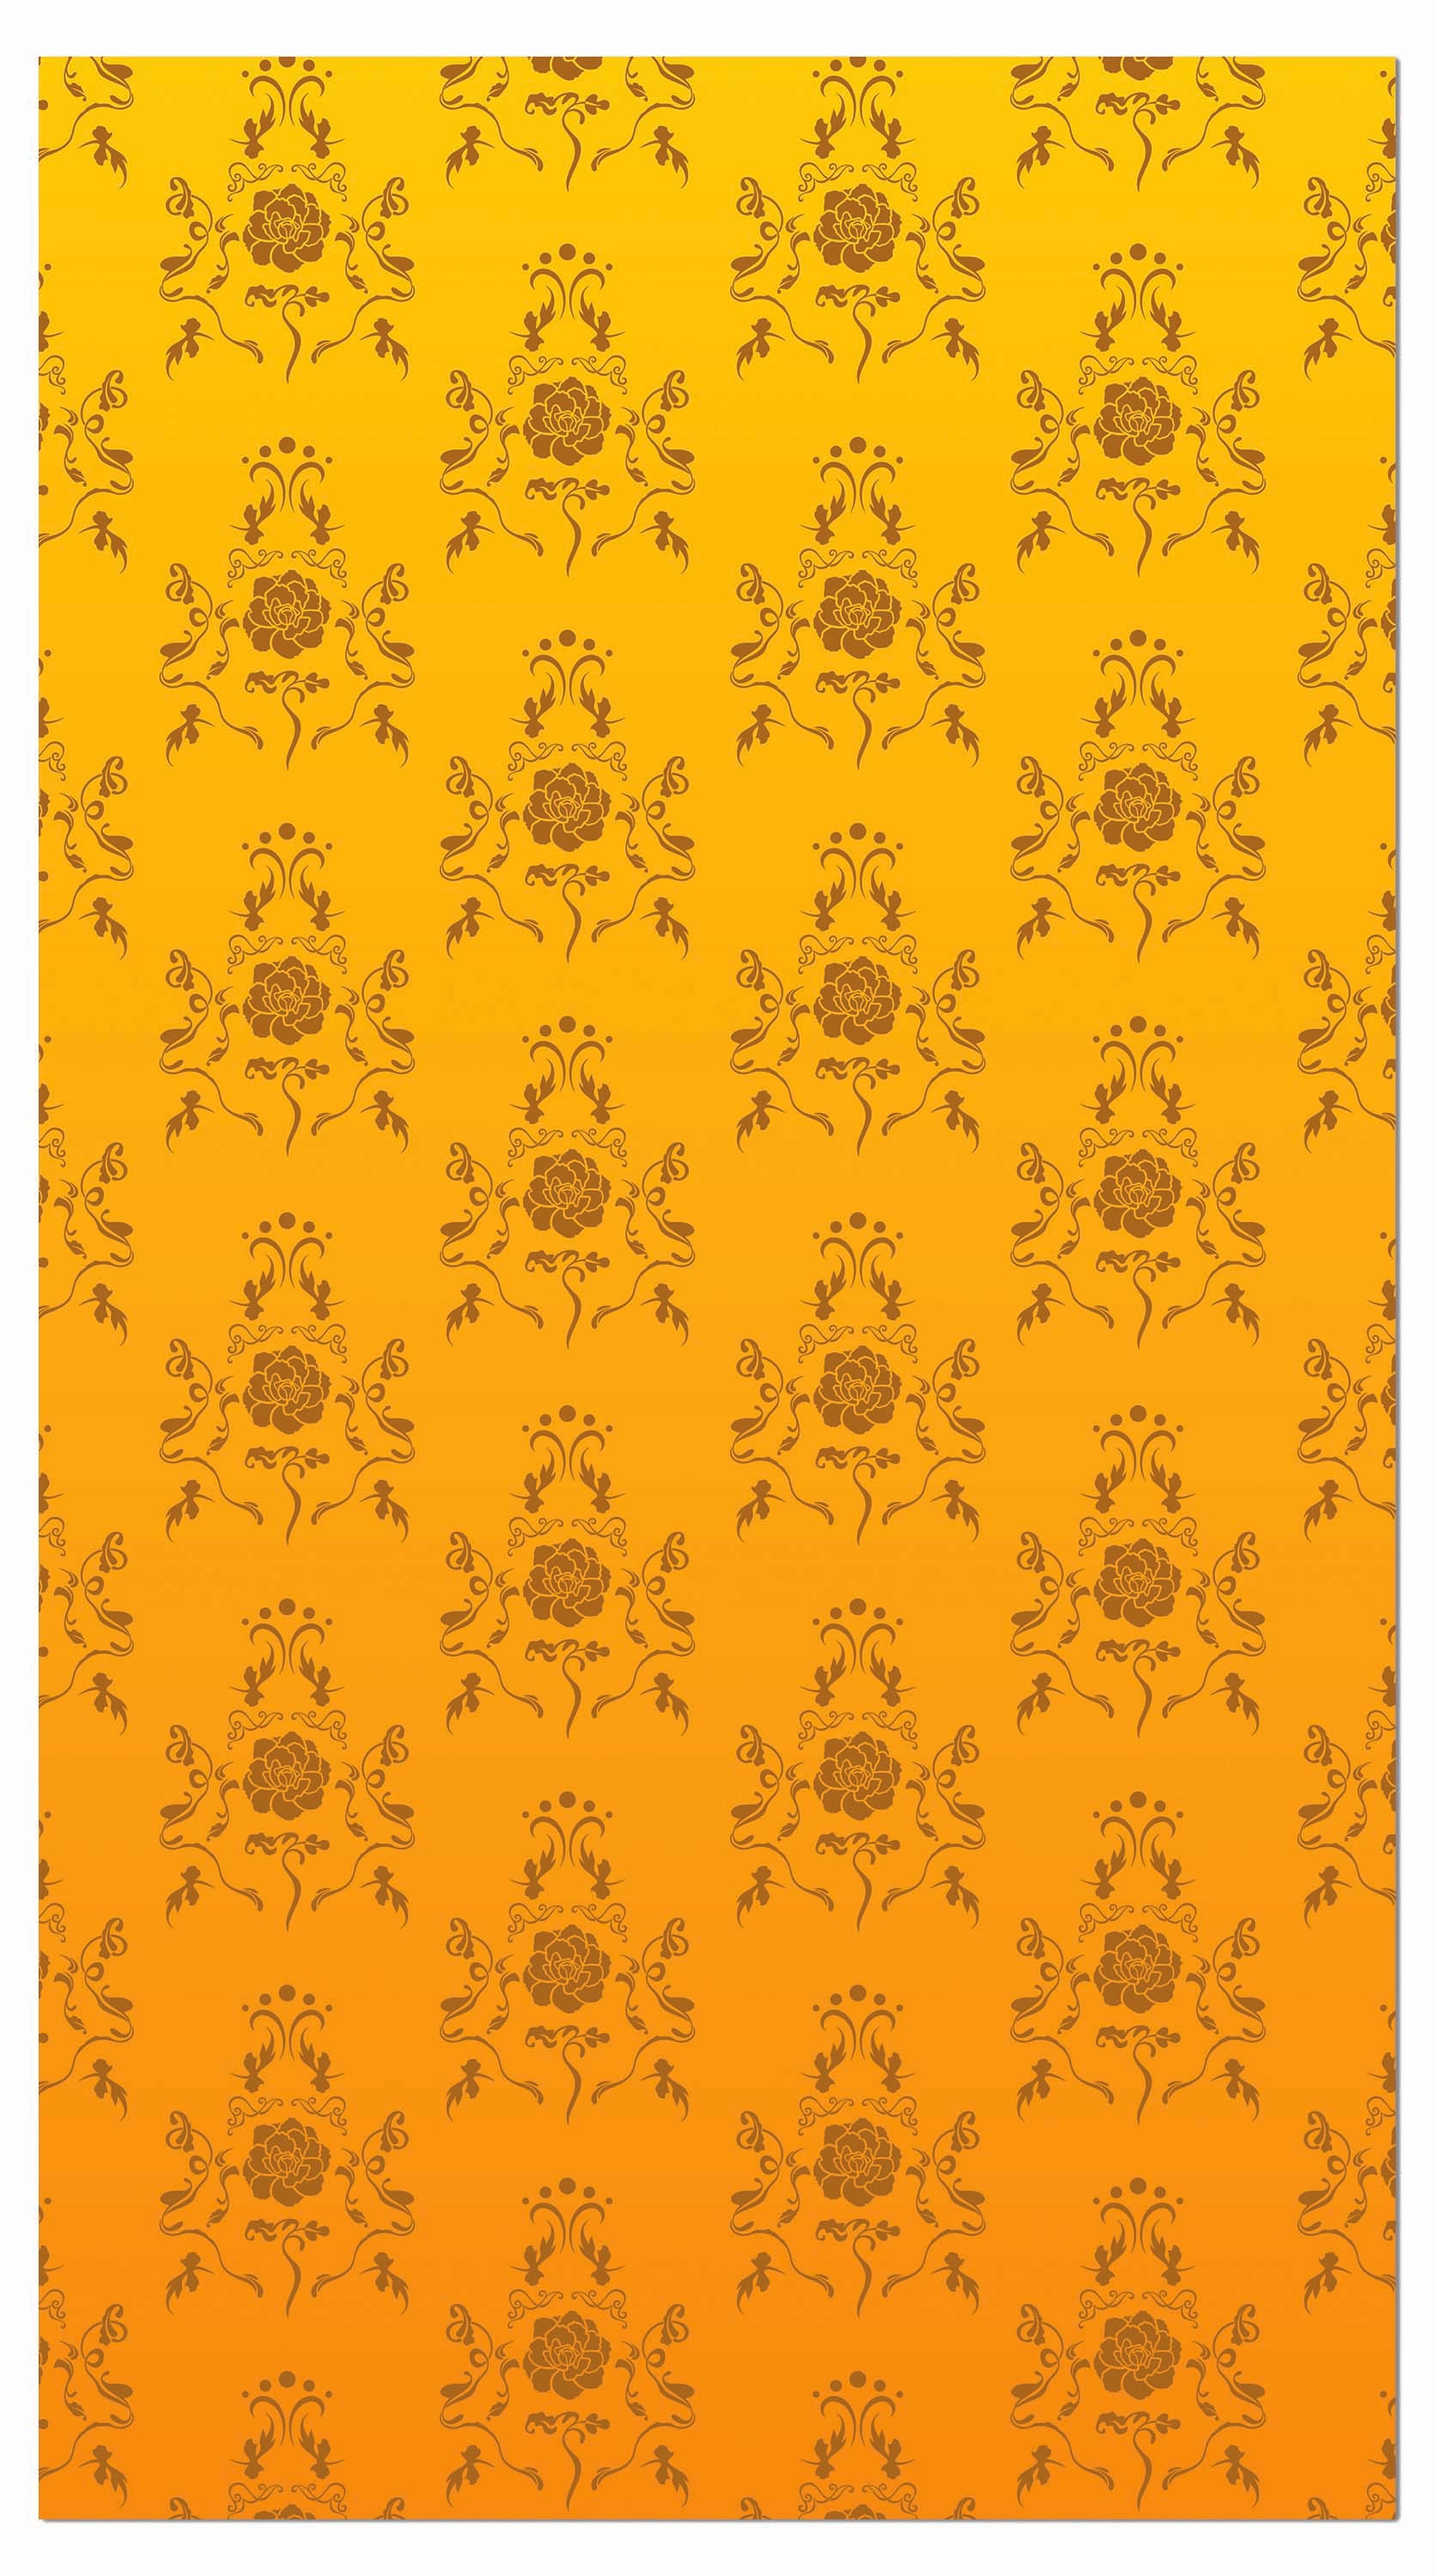 Garderobe Barock Gelb Muster M0118 entdecken - Bild 4